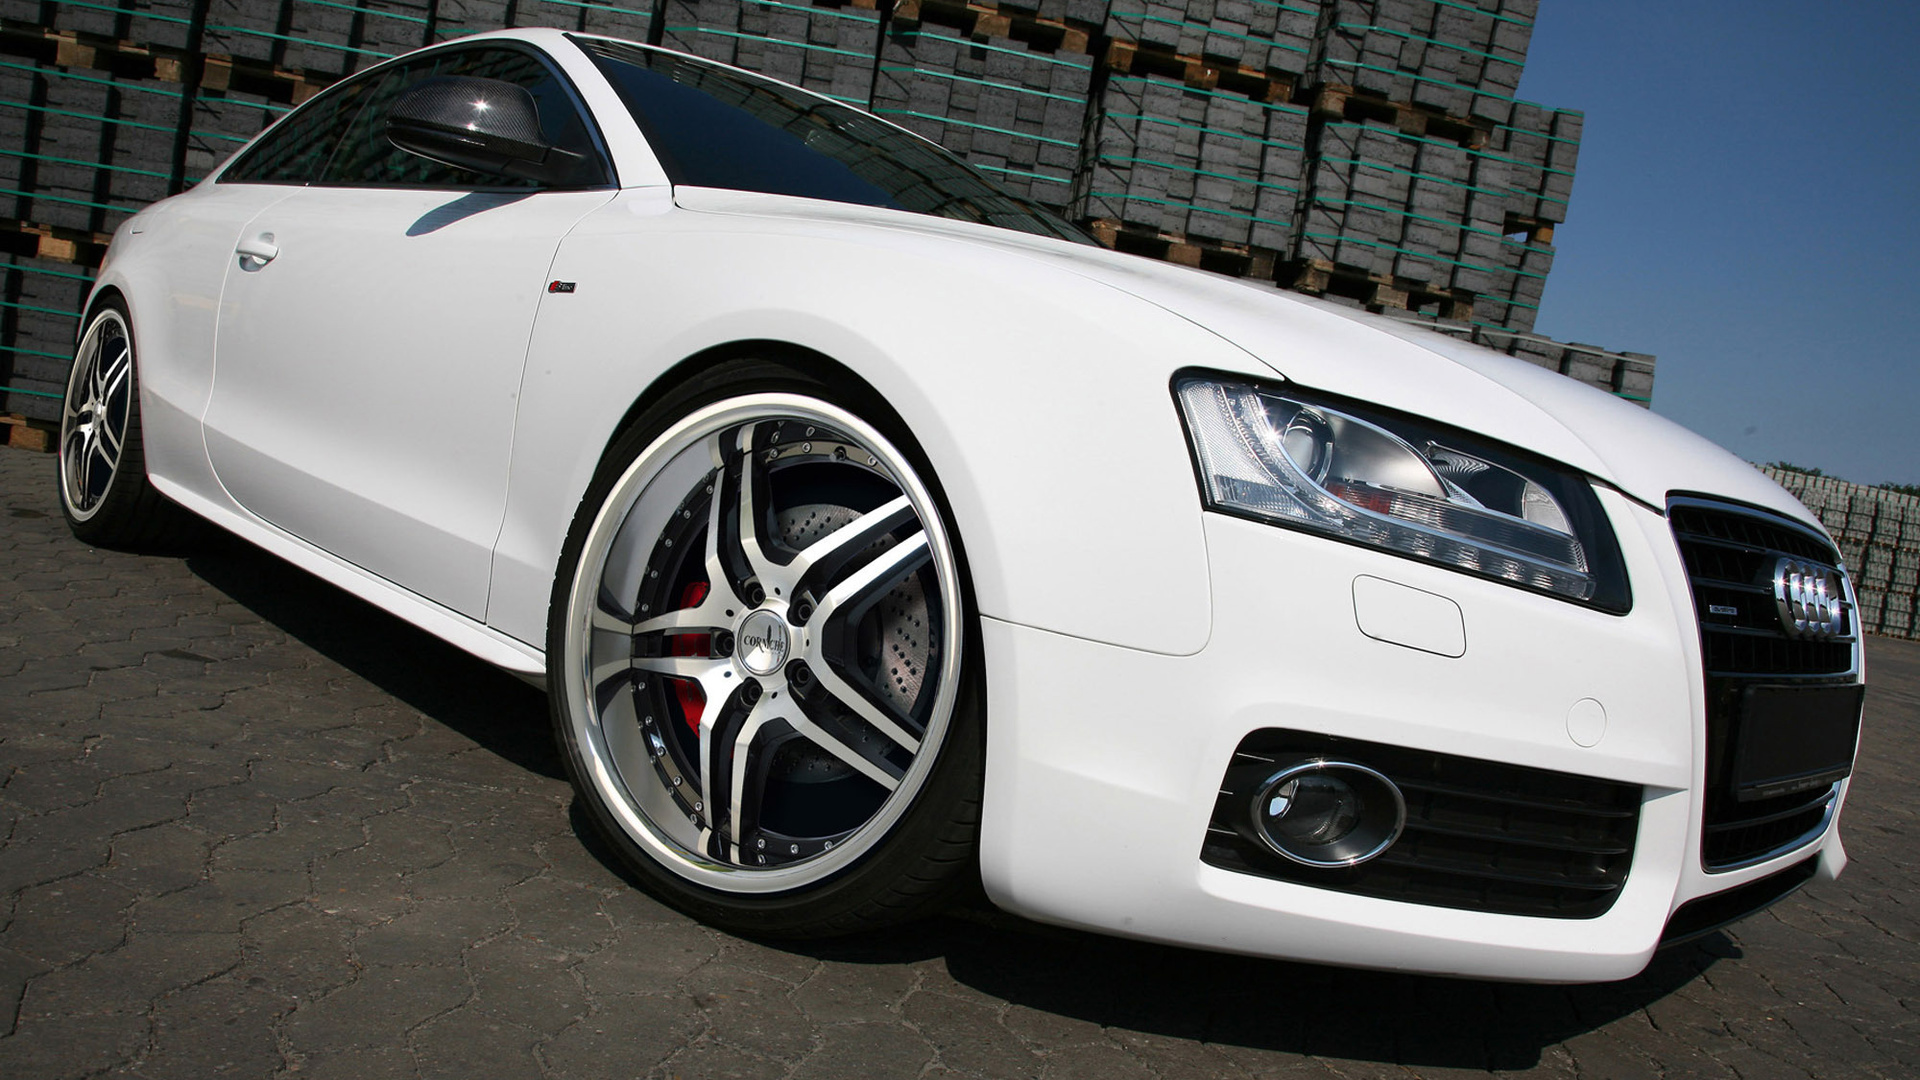 Audi a5, , 